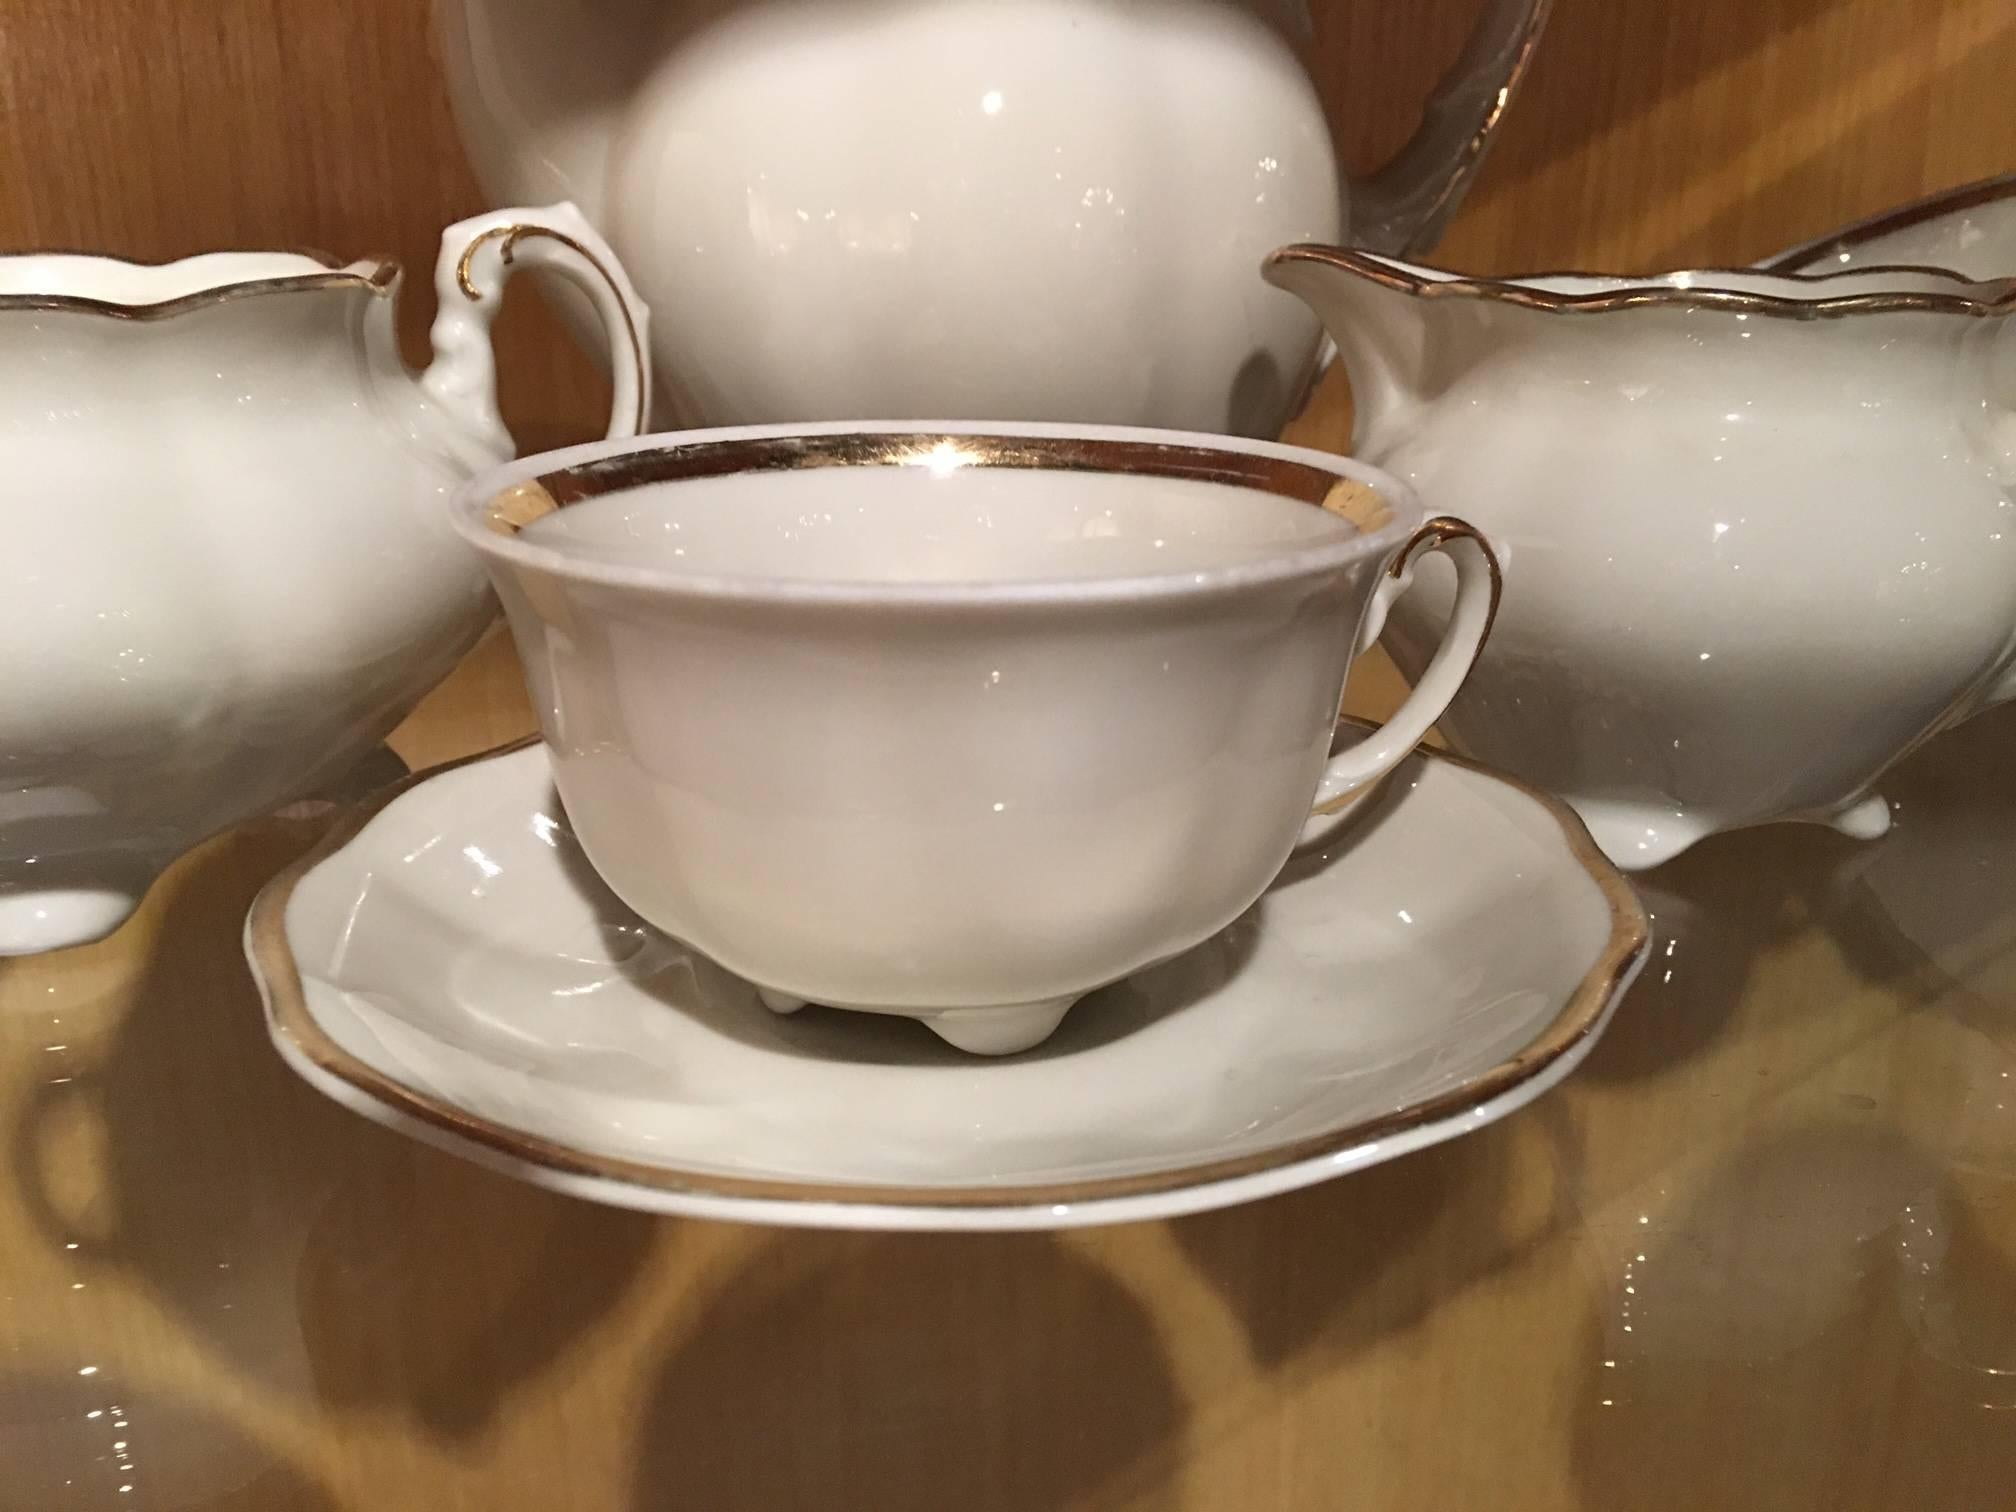 German Veritable Porcelaine Sofafils Tea Set.  White with a Gold Trim.  (2) Tea pot with lid, (1) sugar bowl, (1) creamer, (12) tea cups, (9) saucers.  Early 20th Century
